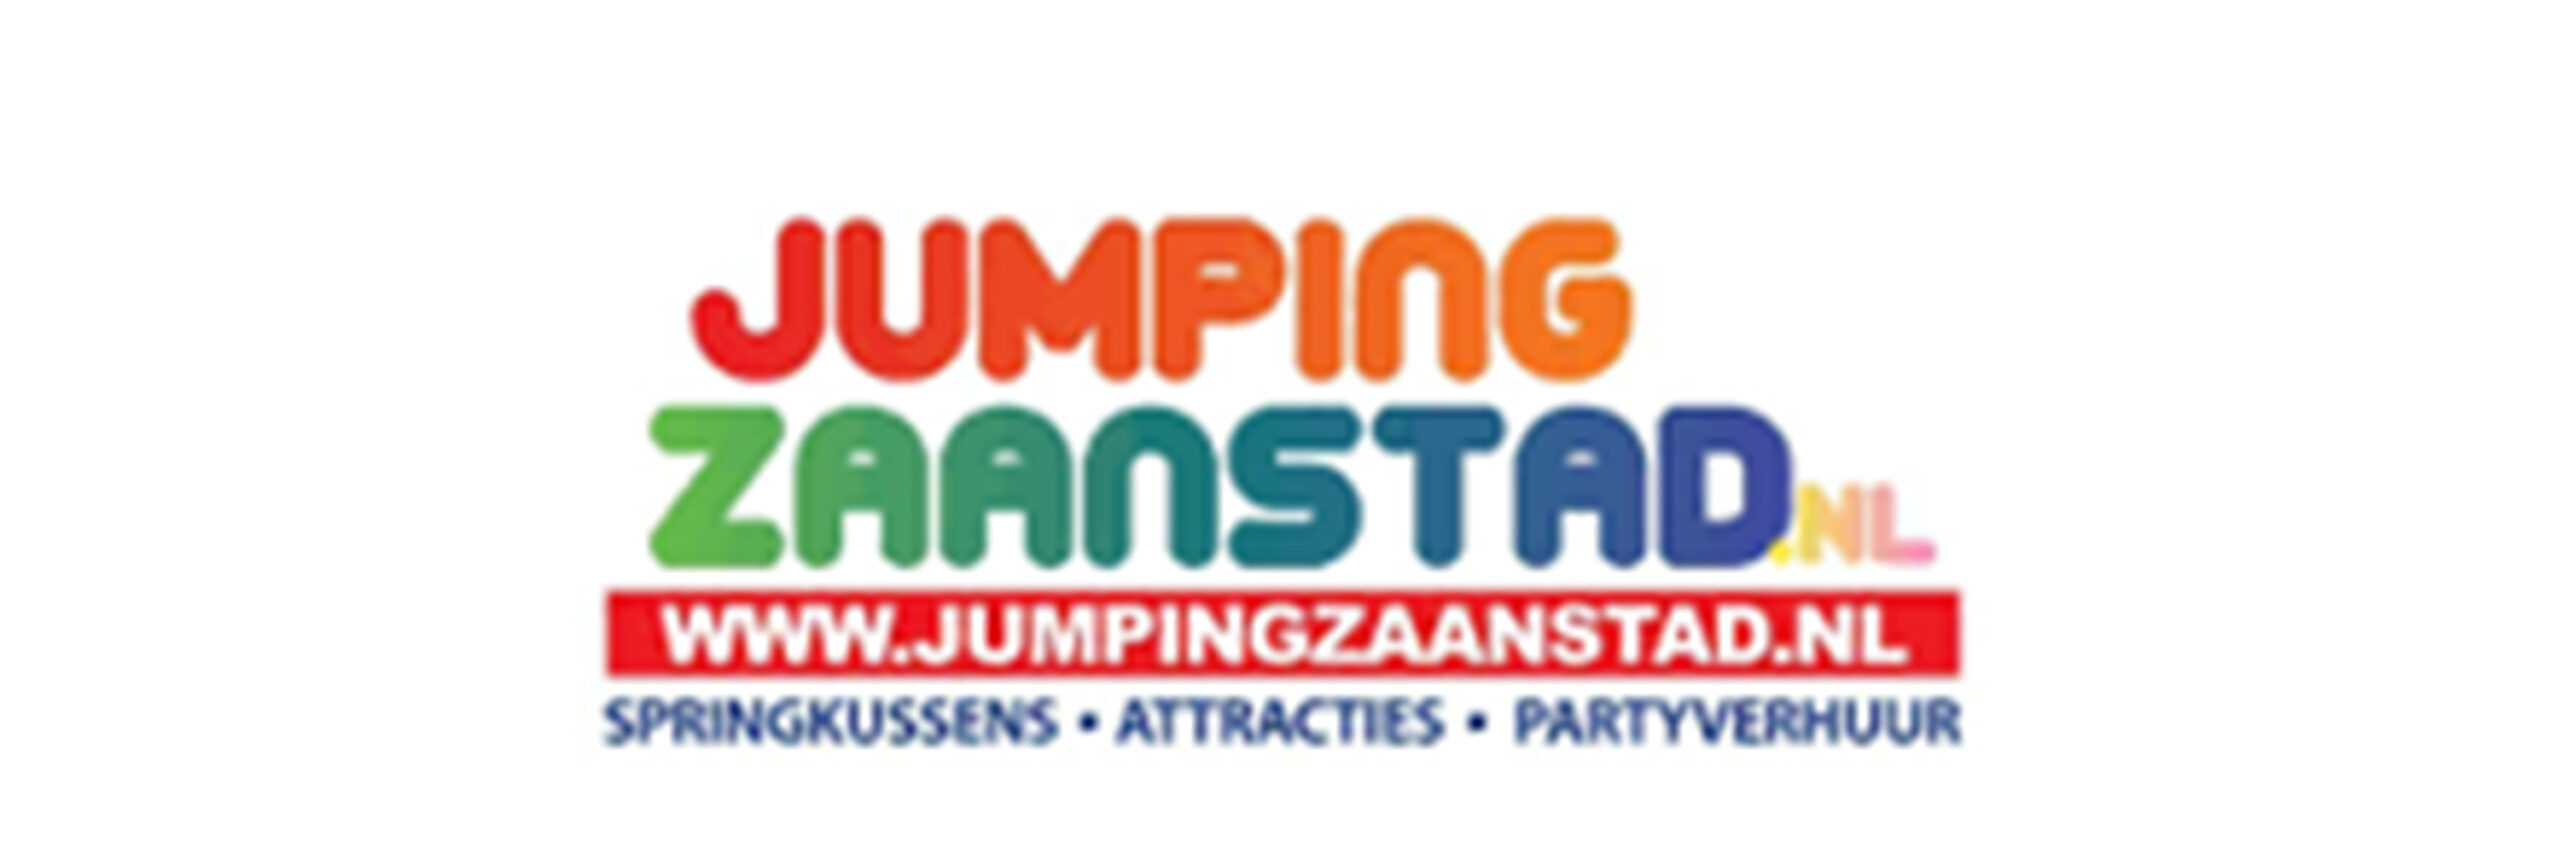 banner_1-3__0009_jumping zaanstad